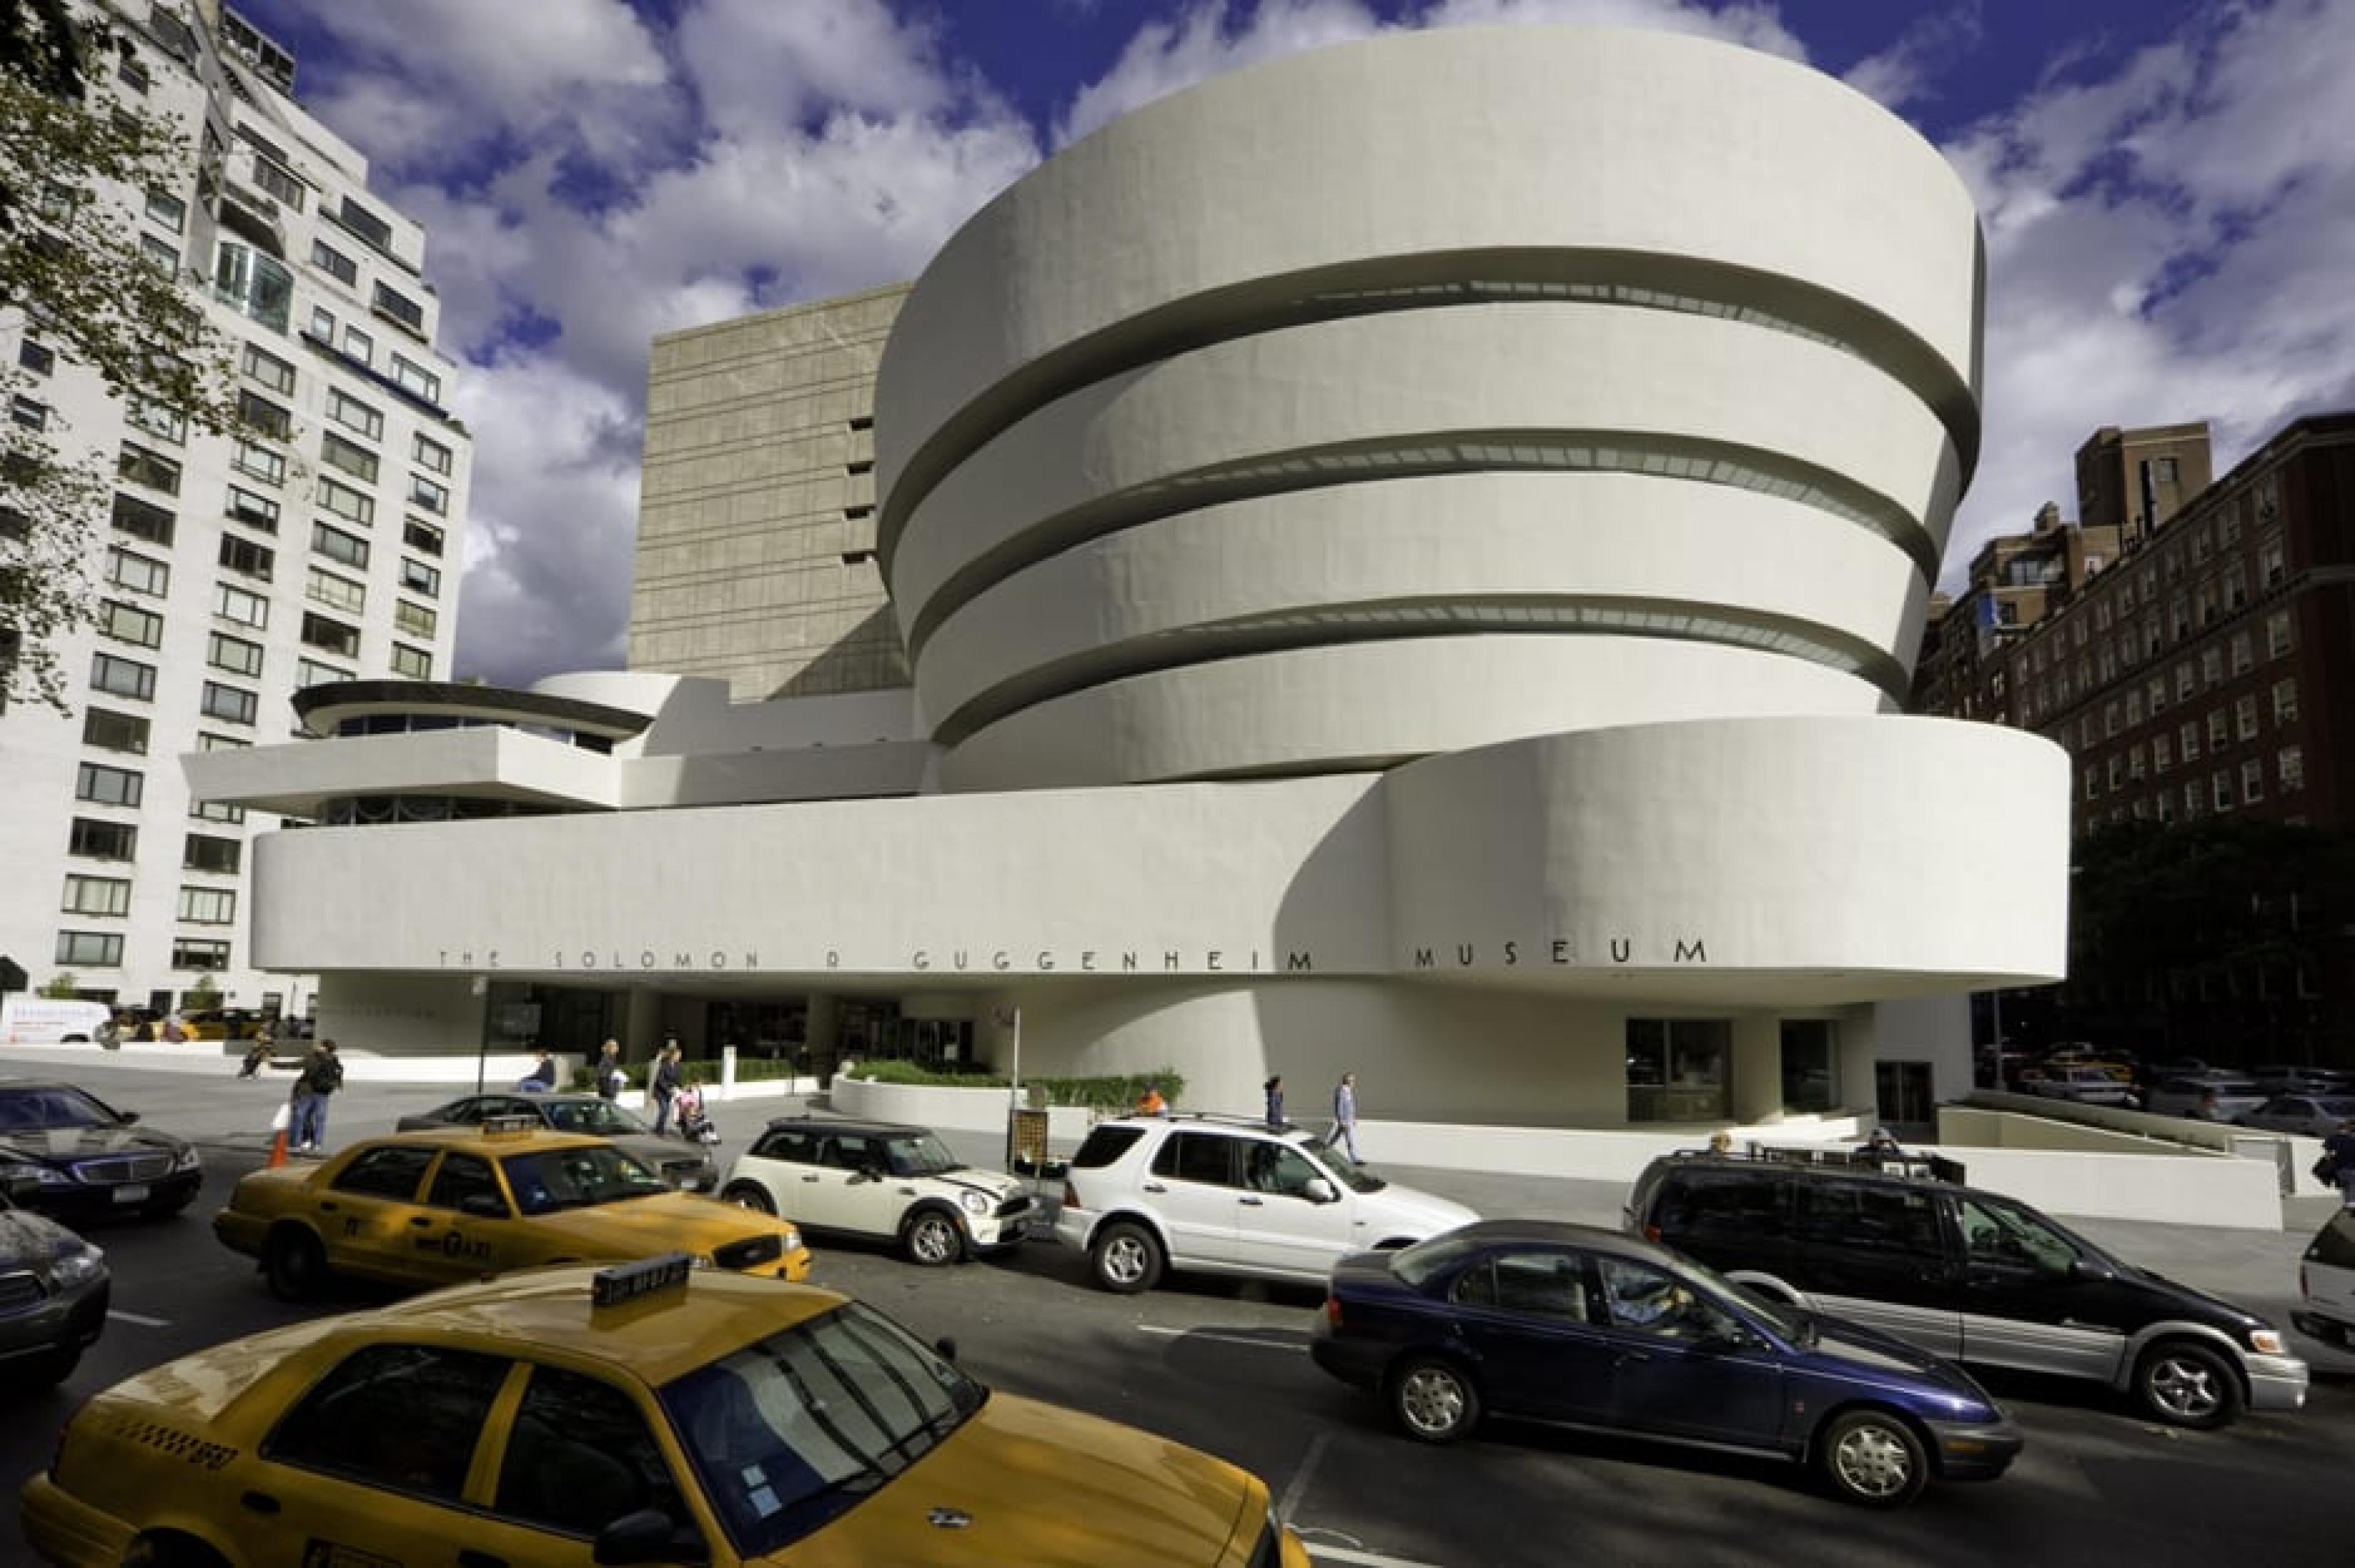 Exterior View - Guggenheim Museum,New York City, New York - Courtesy David Heald,
The Solomon R. Guggenheim Foundation